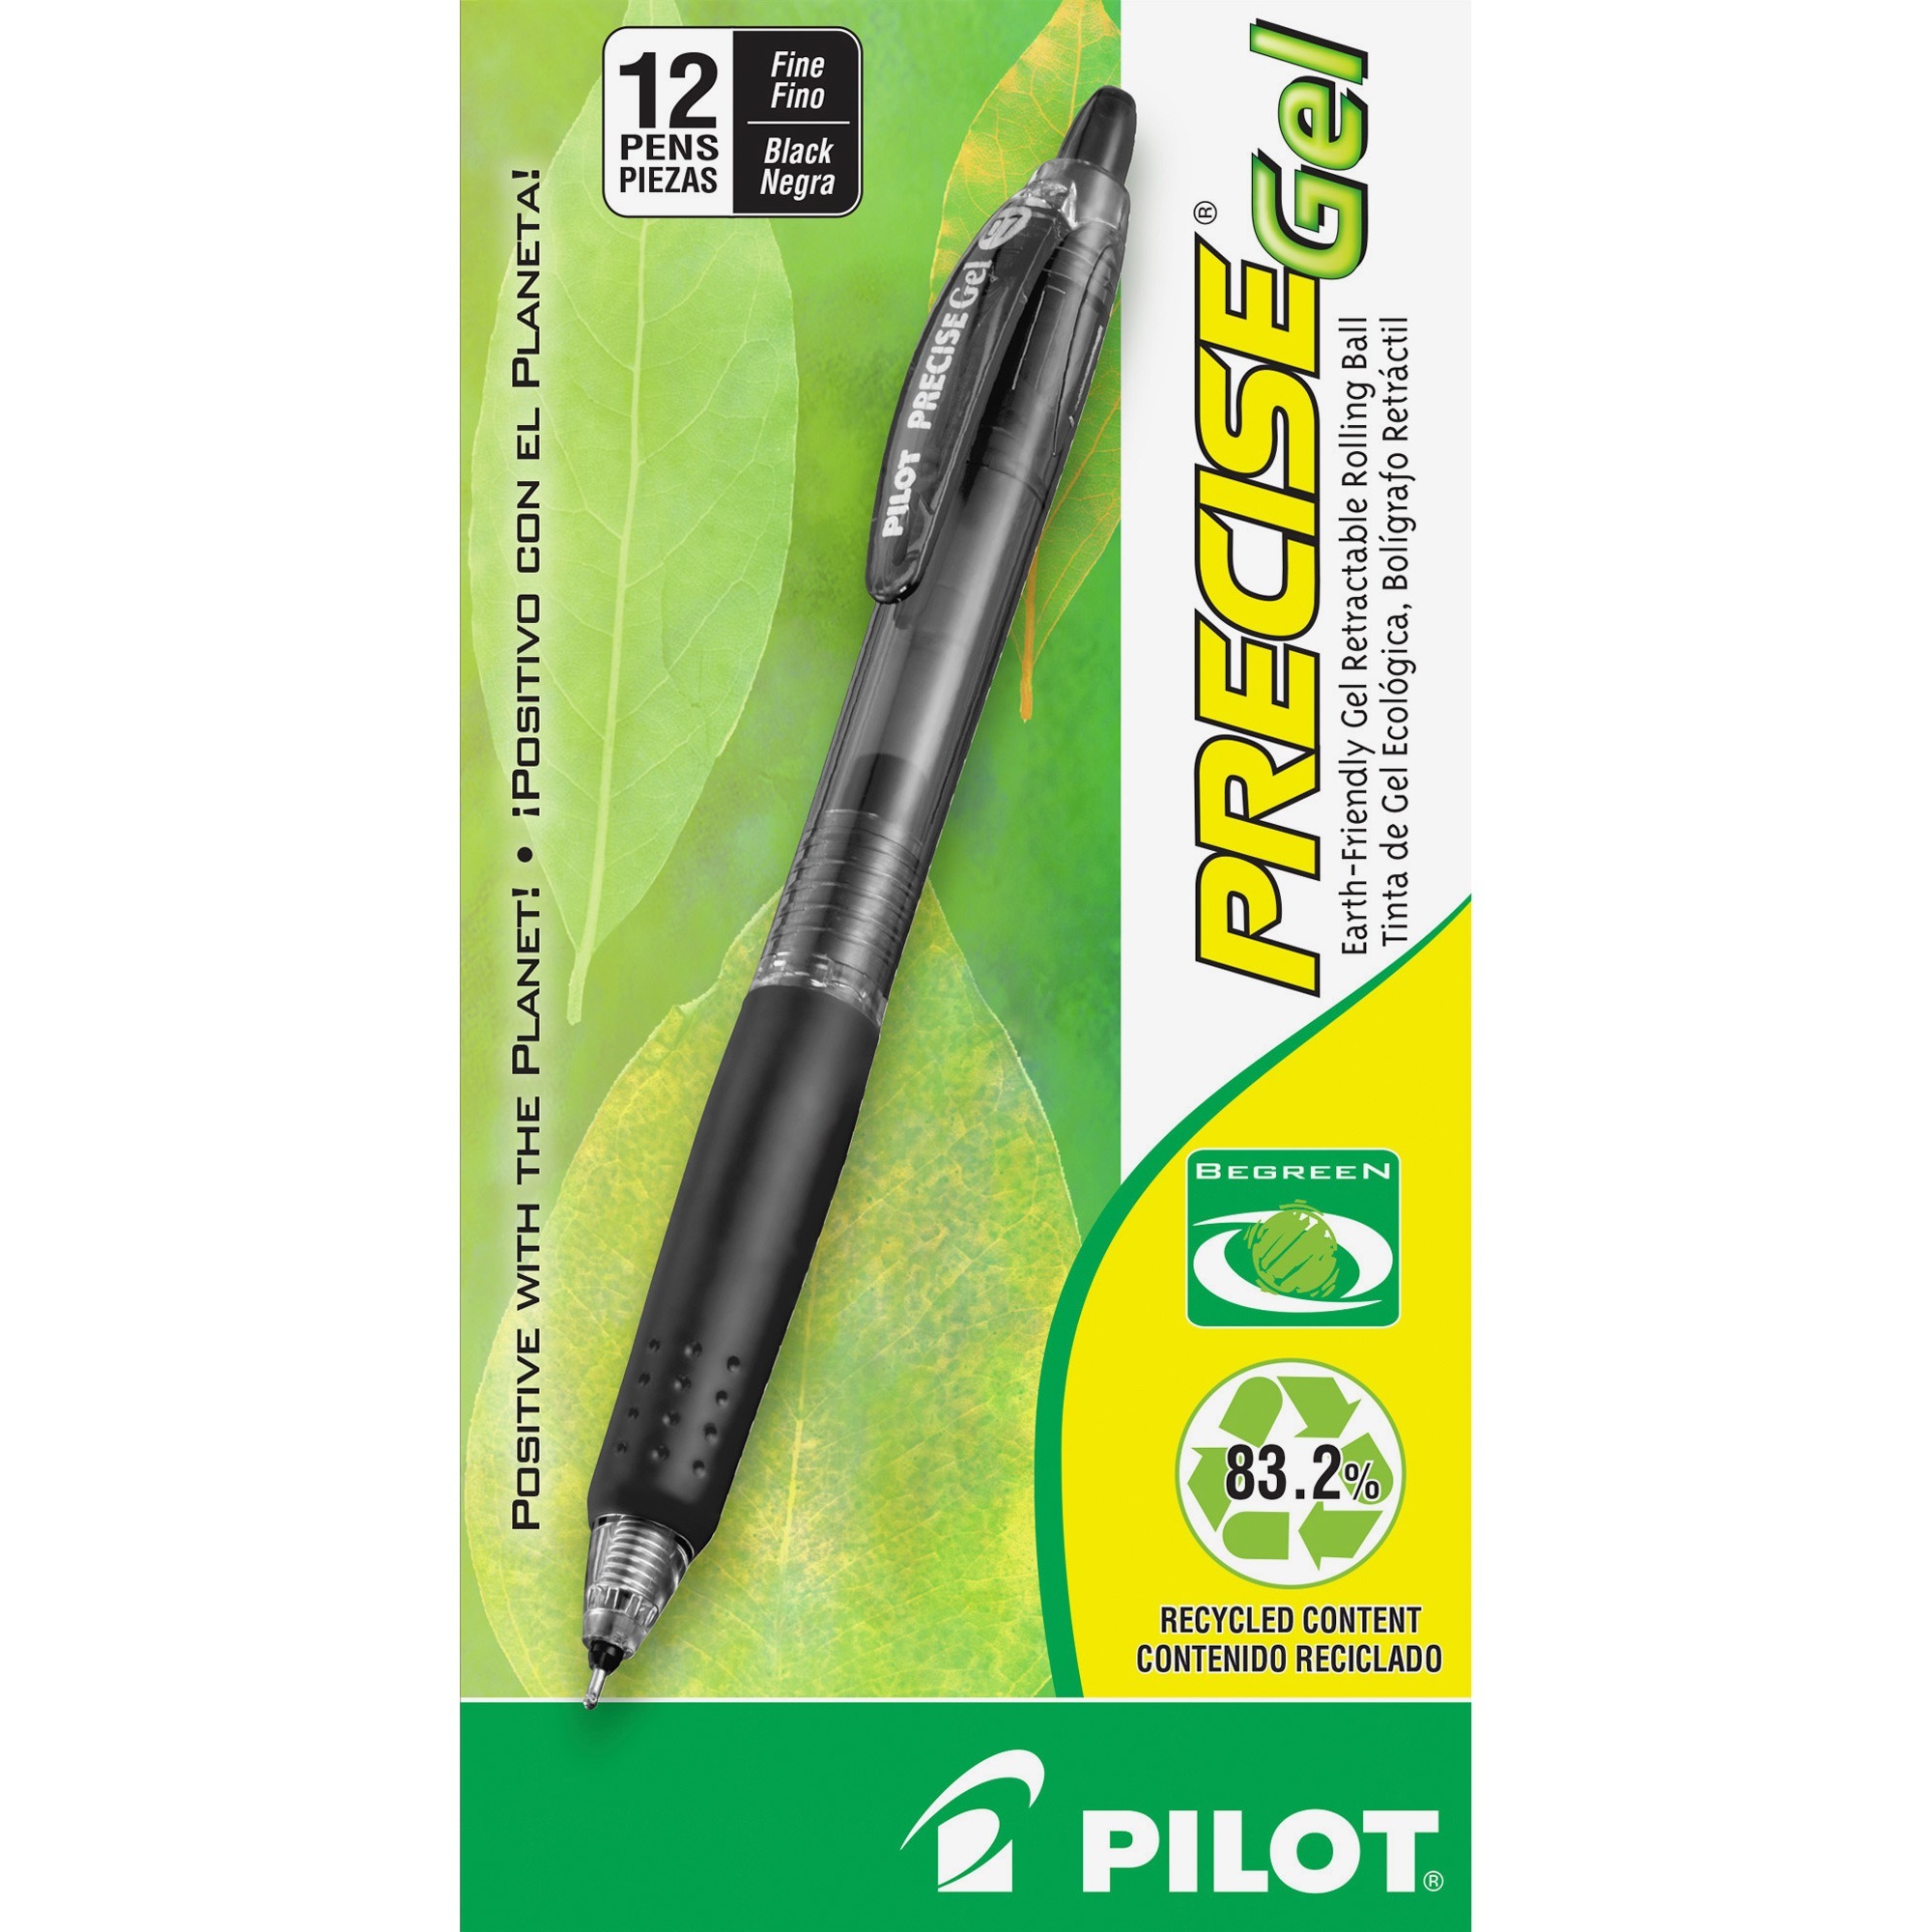 Paper Mate Flair Point Guard Felt Tip Marker Pens - Medium Pen Point - Black  Water Based Ink - Black Barrel - 2 / Pack